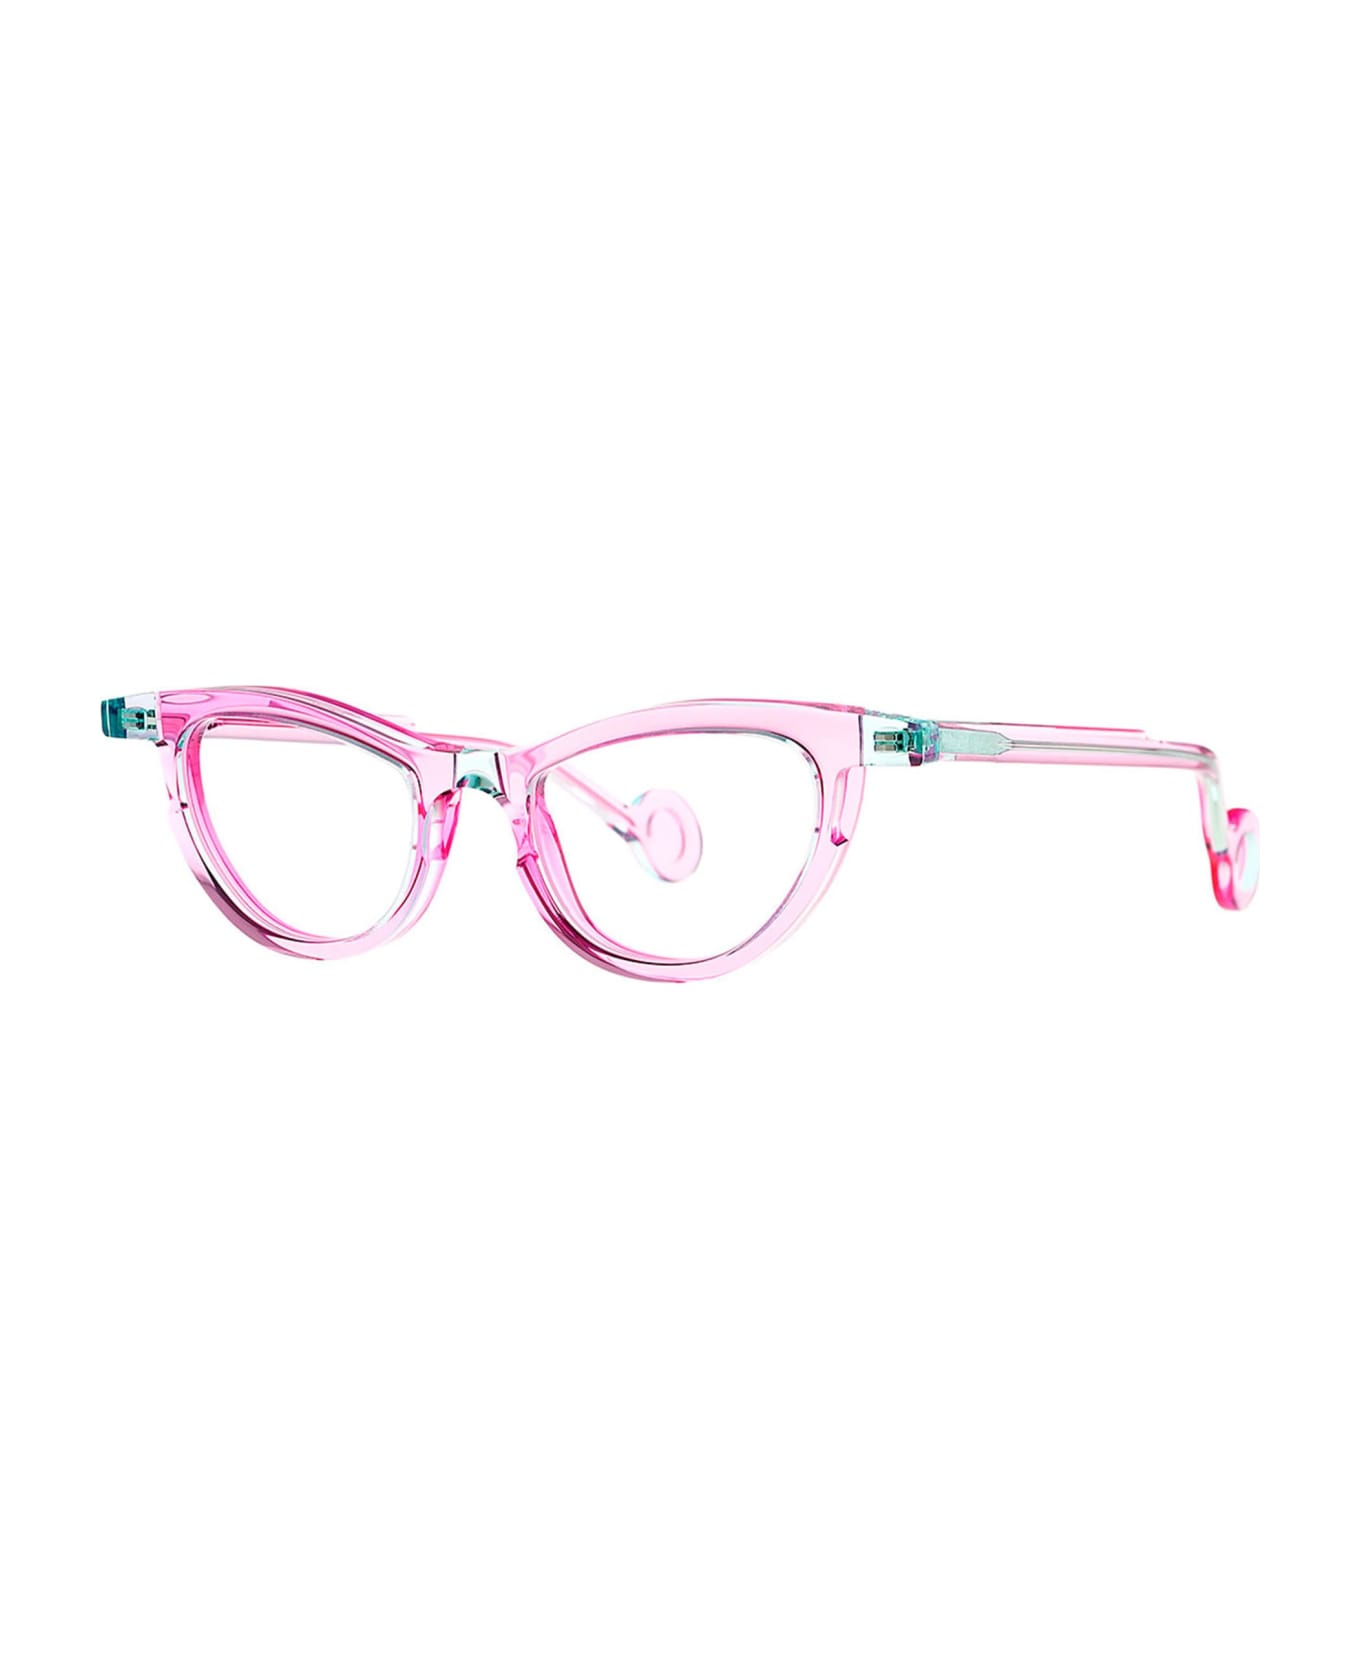 Theo Eyewear Pablo - 011 Rx Glasses - pink